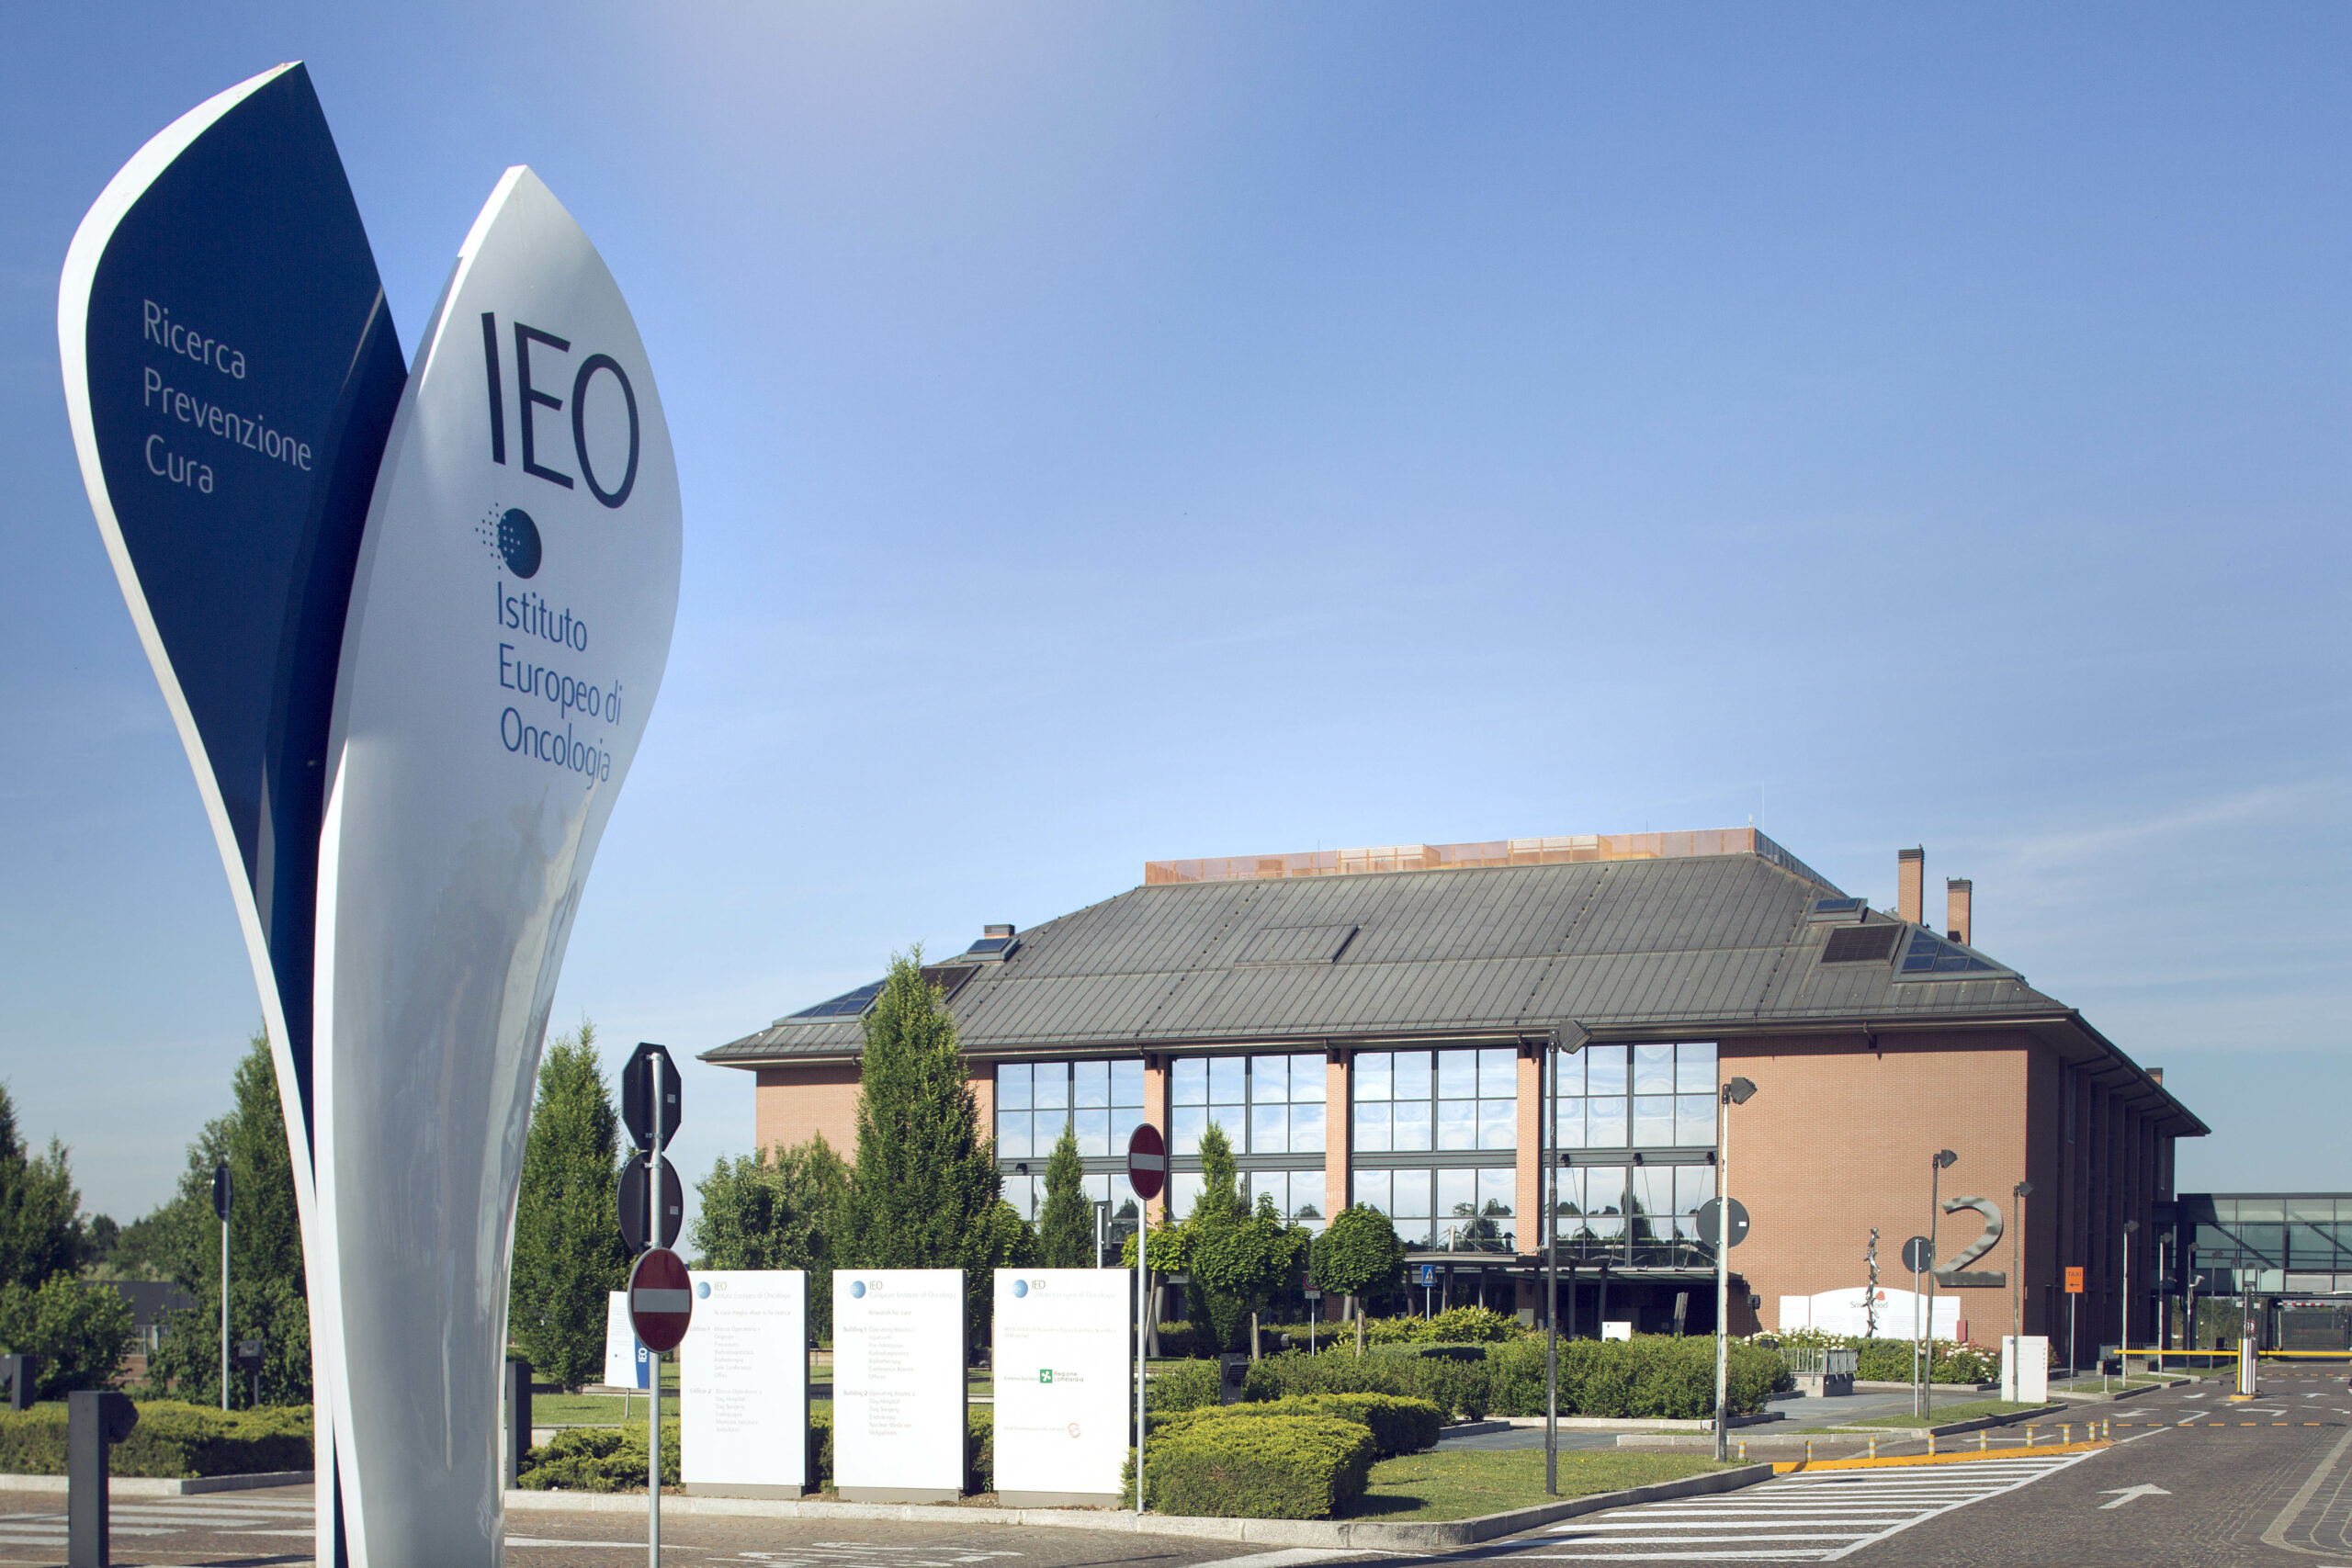 IEO - Istituto Europeo di Oncologia